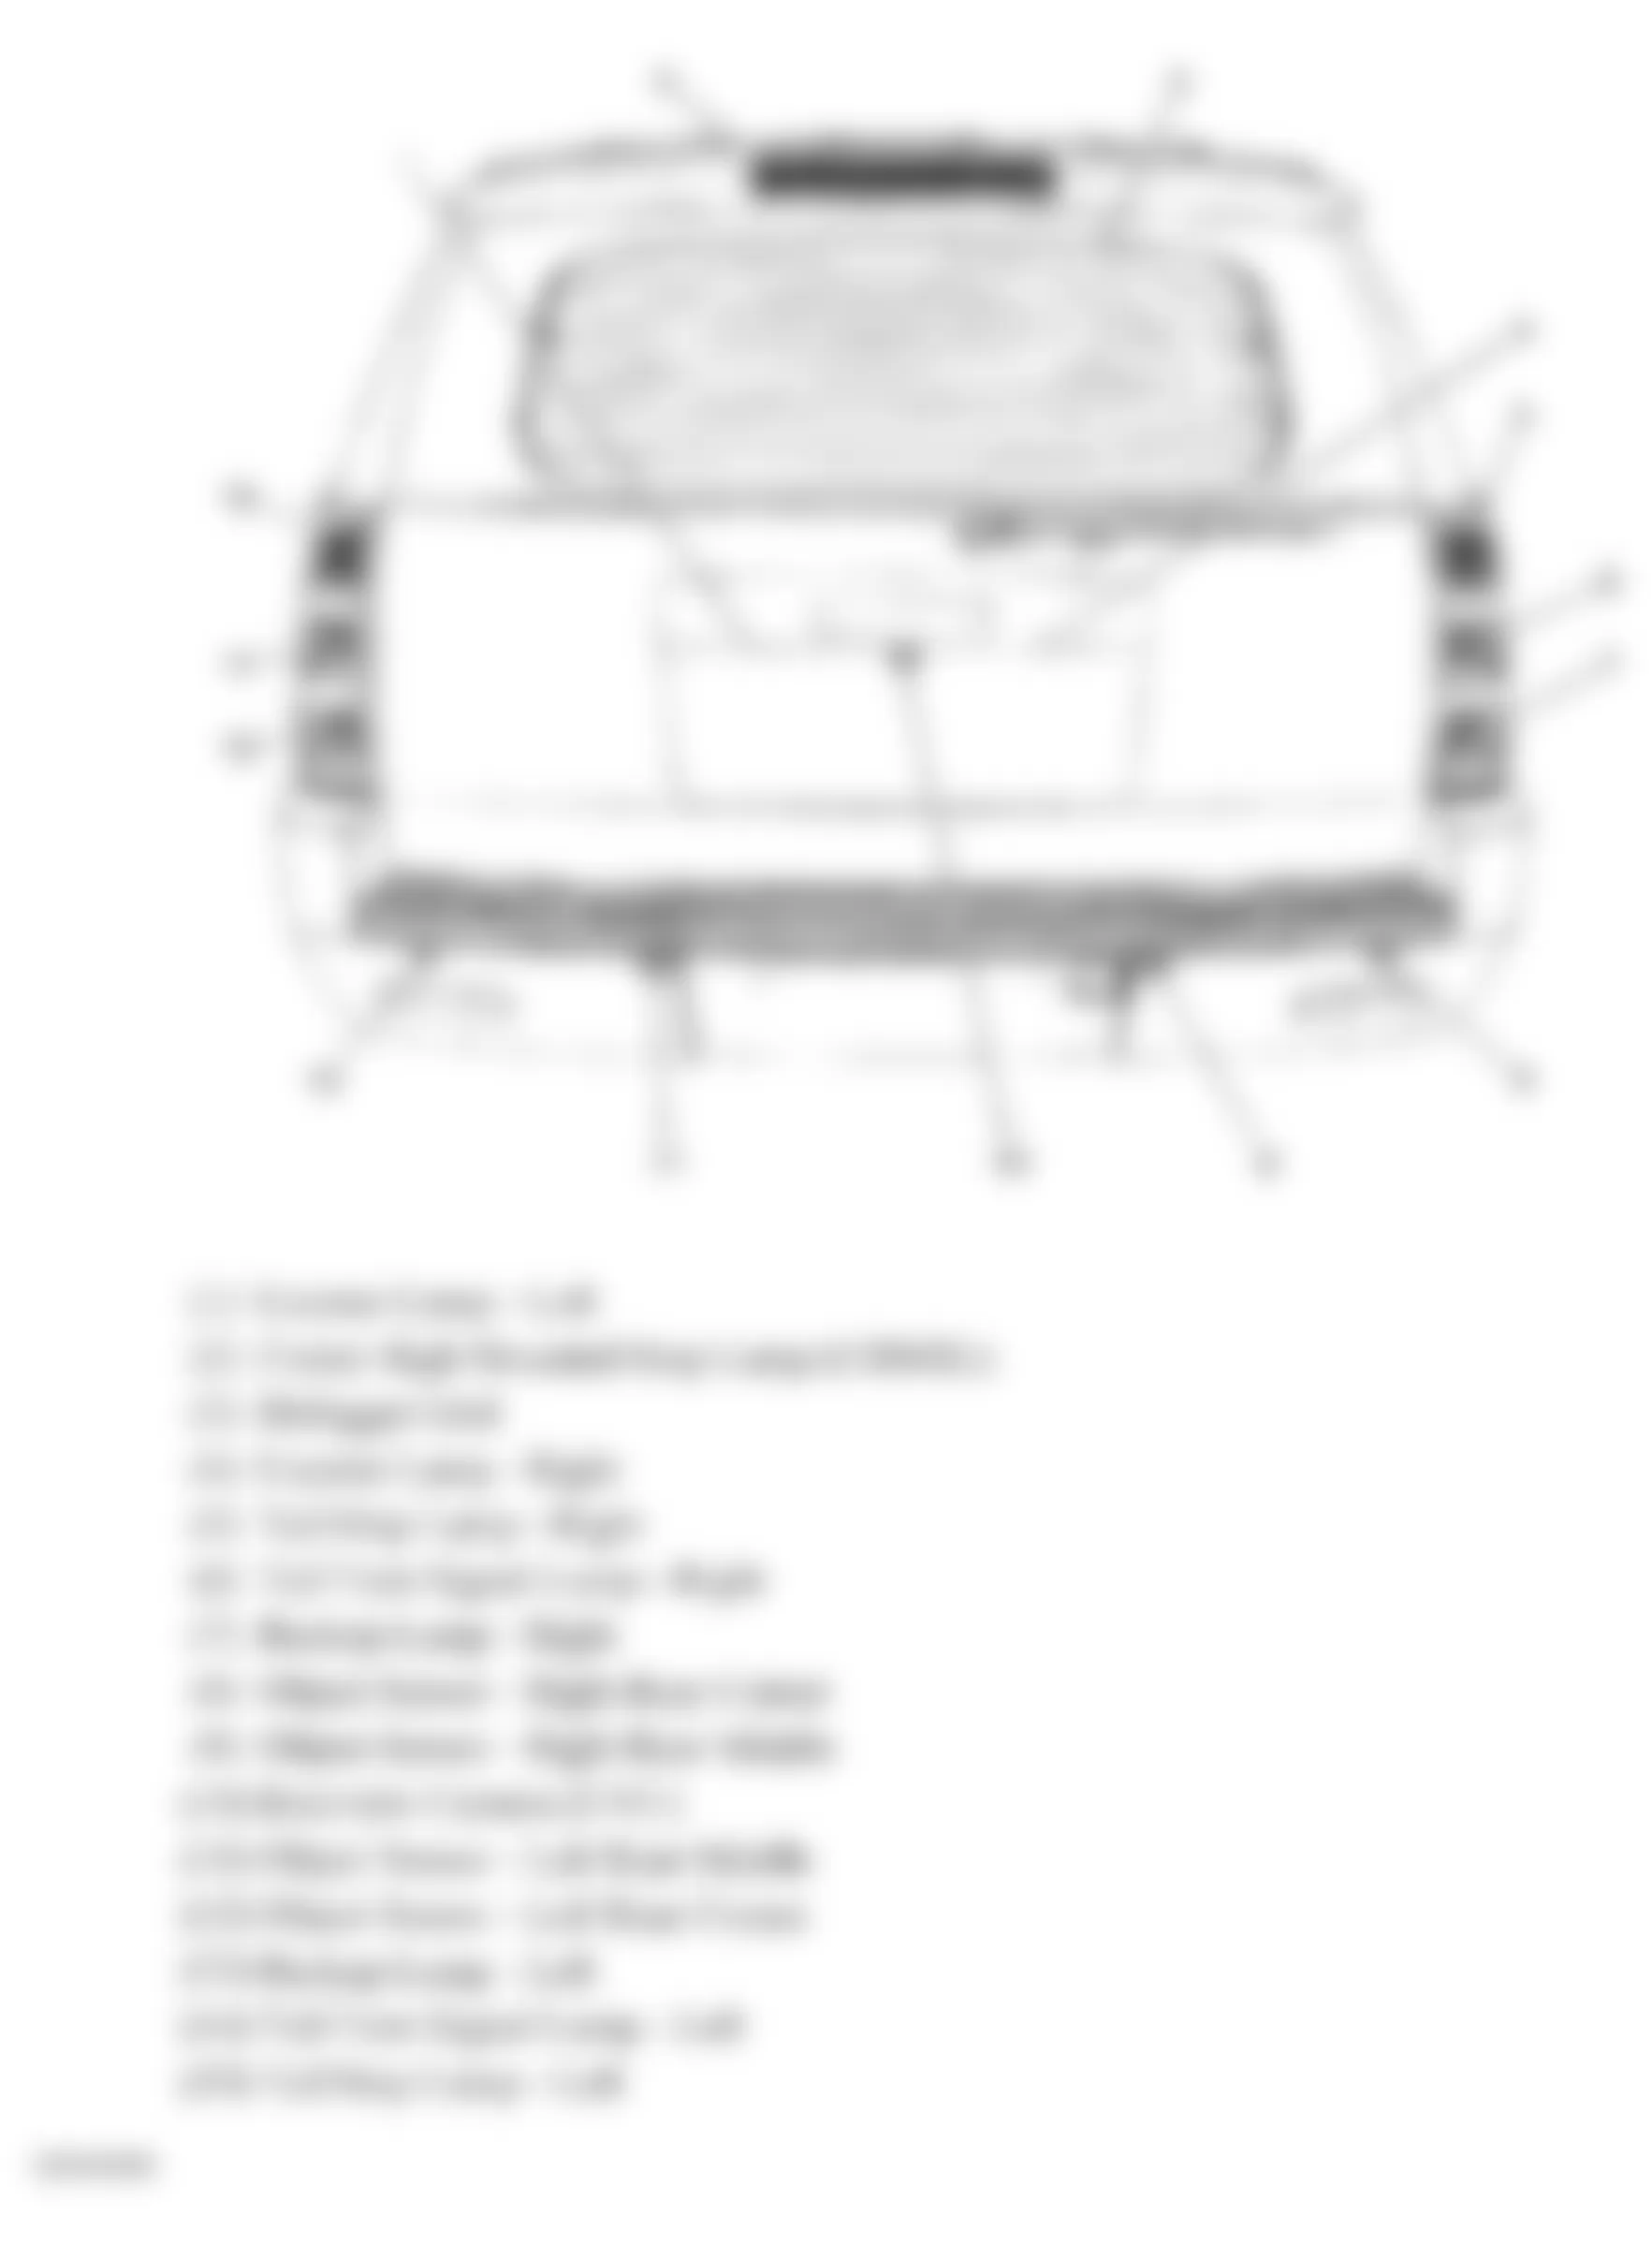 GMC Yukon XL K2500 2007 - Component Locations -  Rear Of Vehicle (Yukon W/One Piece Liftgate)